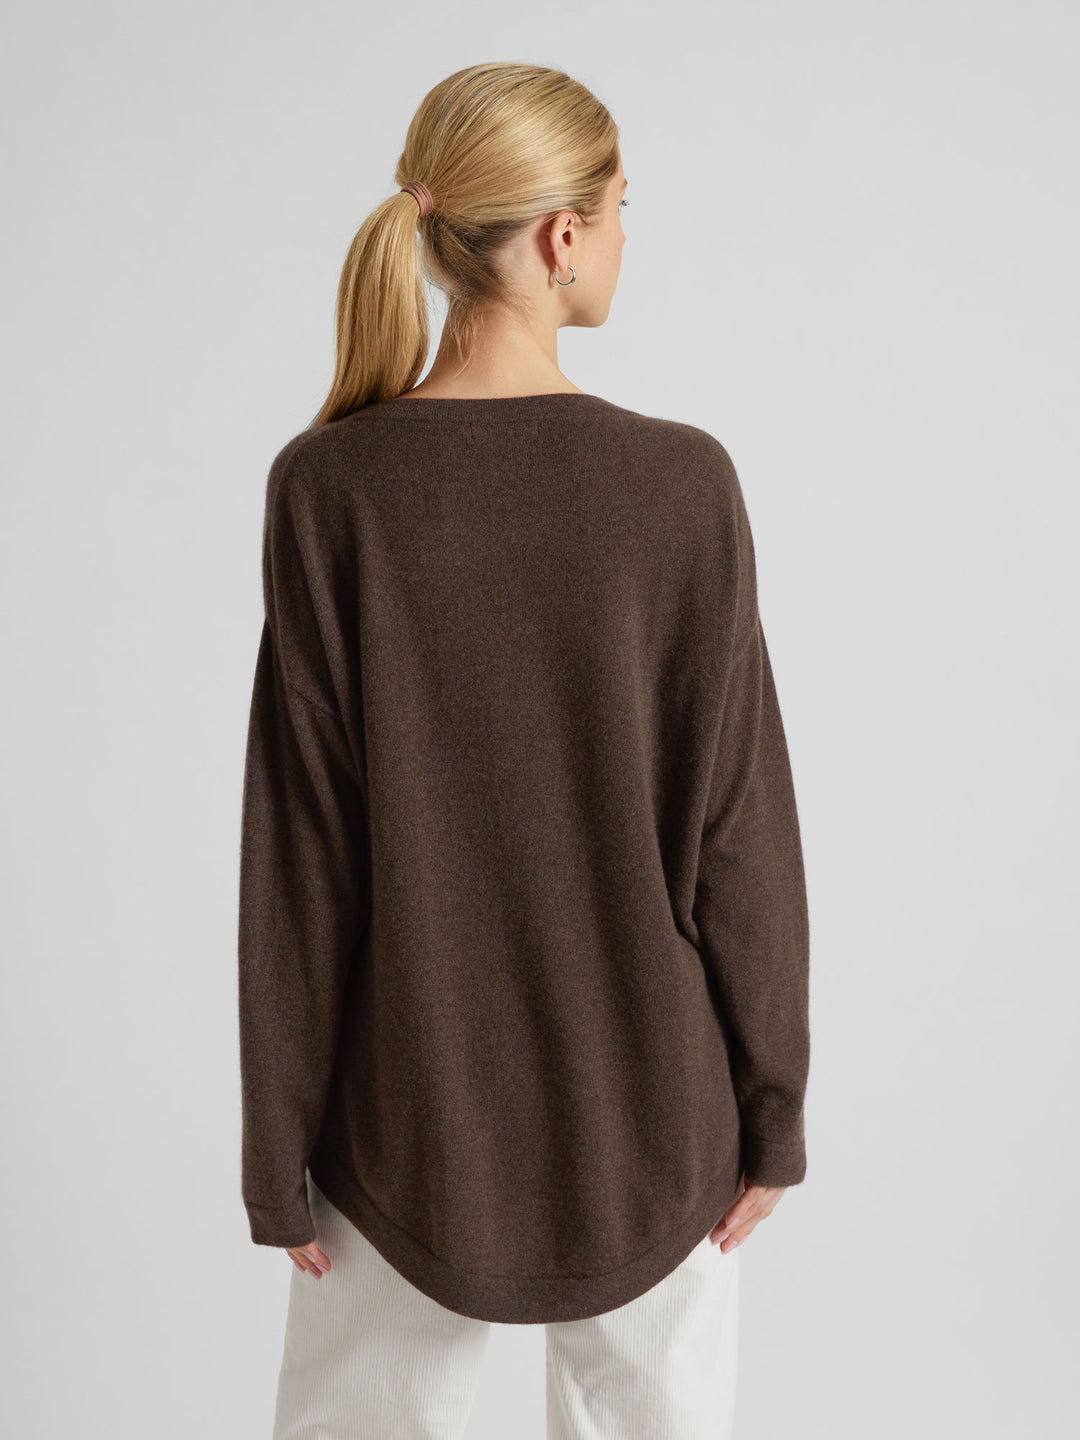 Cashmere sweater v-neck "Alva" in 100% pure cashmere. Scandinavian design by Kashmina. Color: Dark Brown.